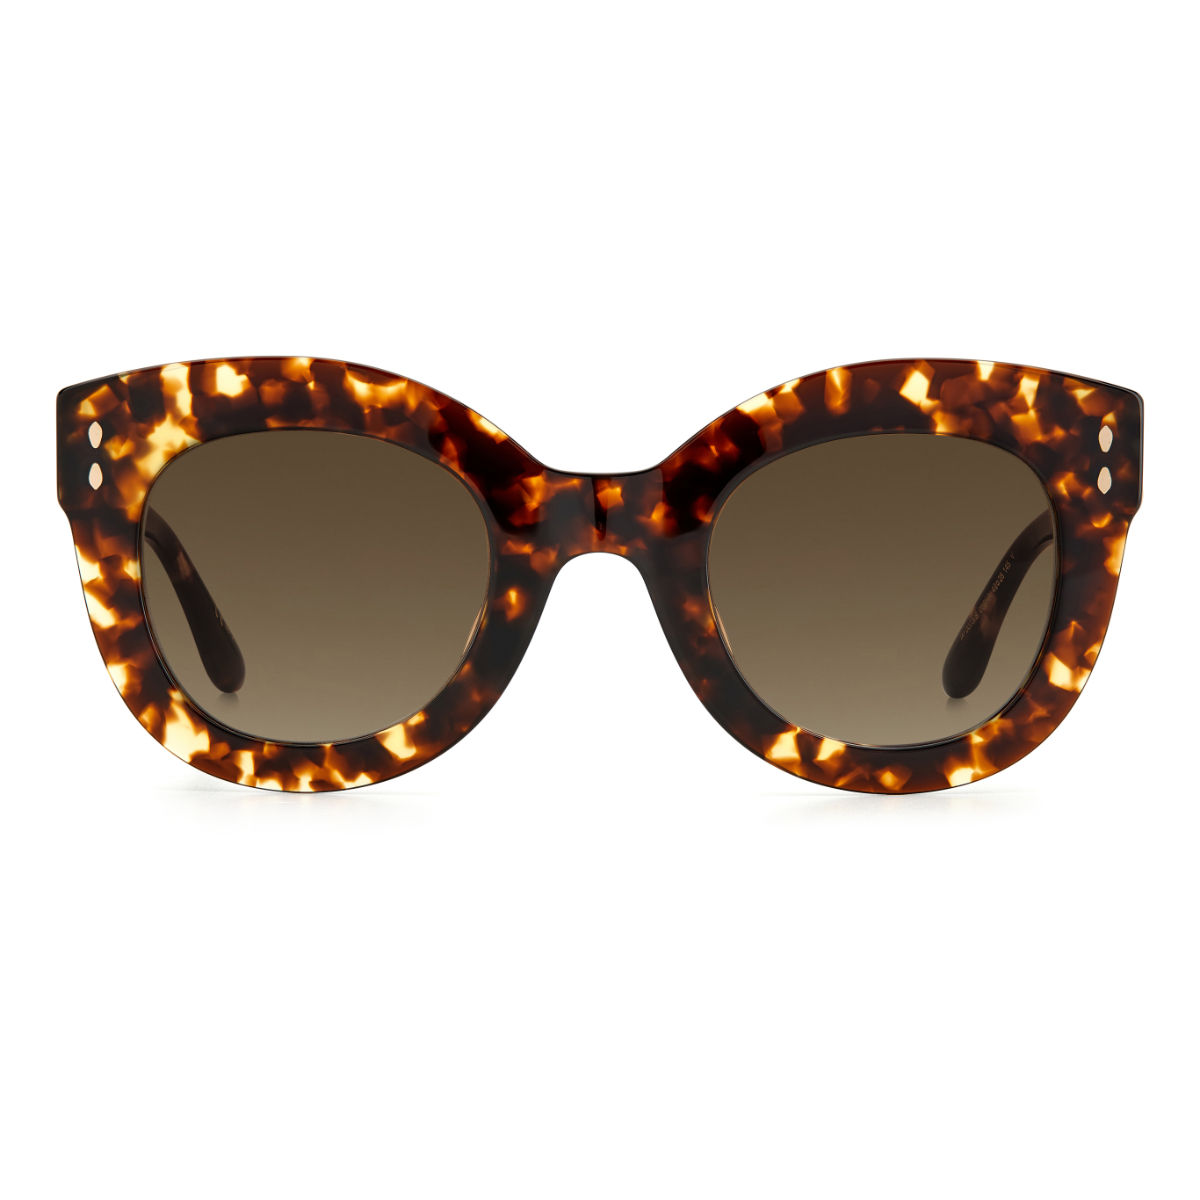 Buy Golden Round Aviator Sunglasses Online - ZAAS Fashion